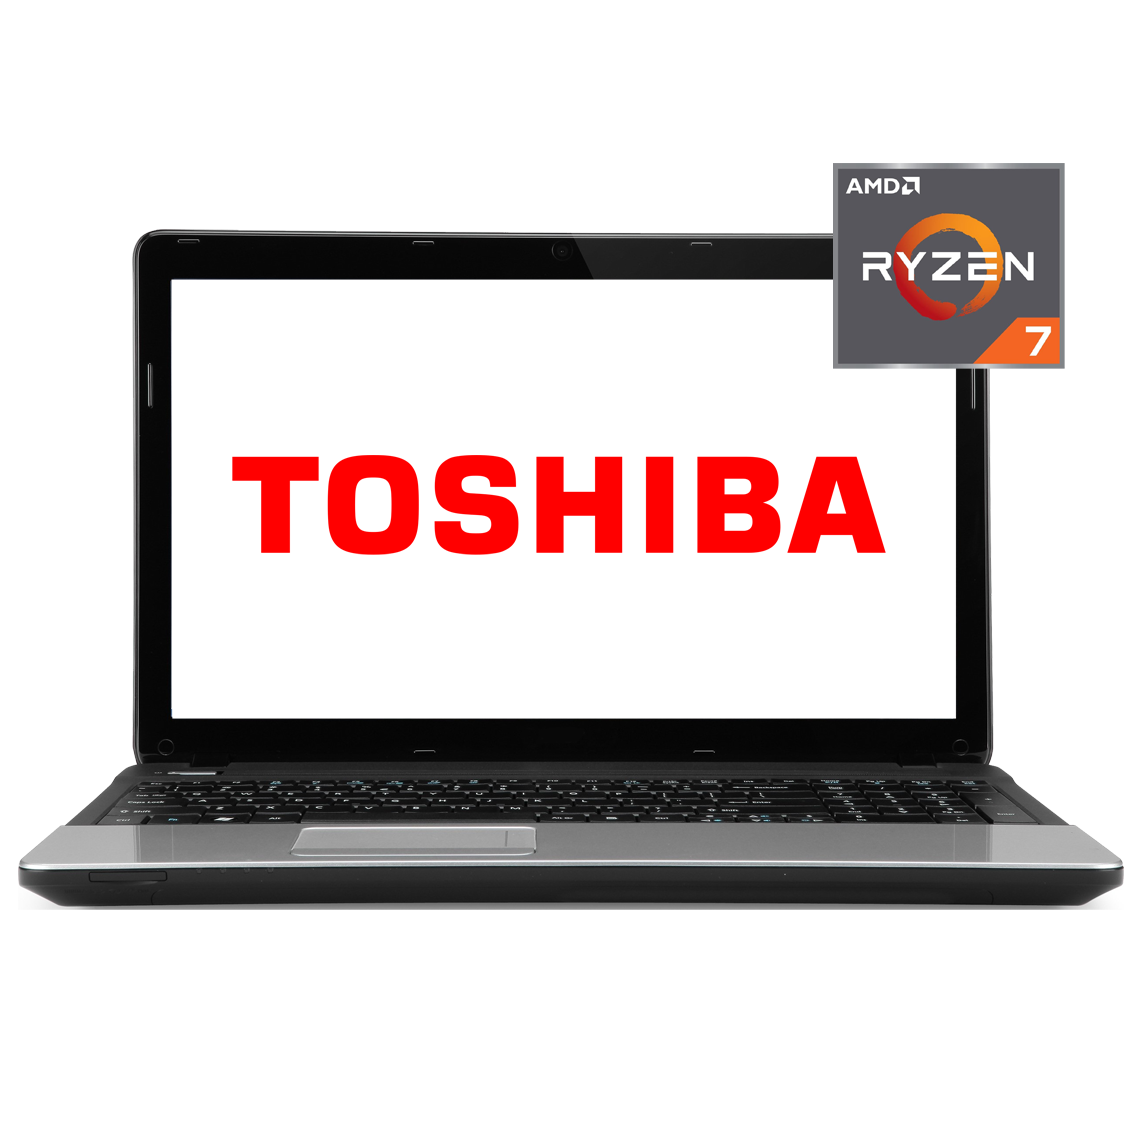 Toshiba - 14 inch AMD Ryzen 7